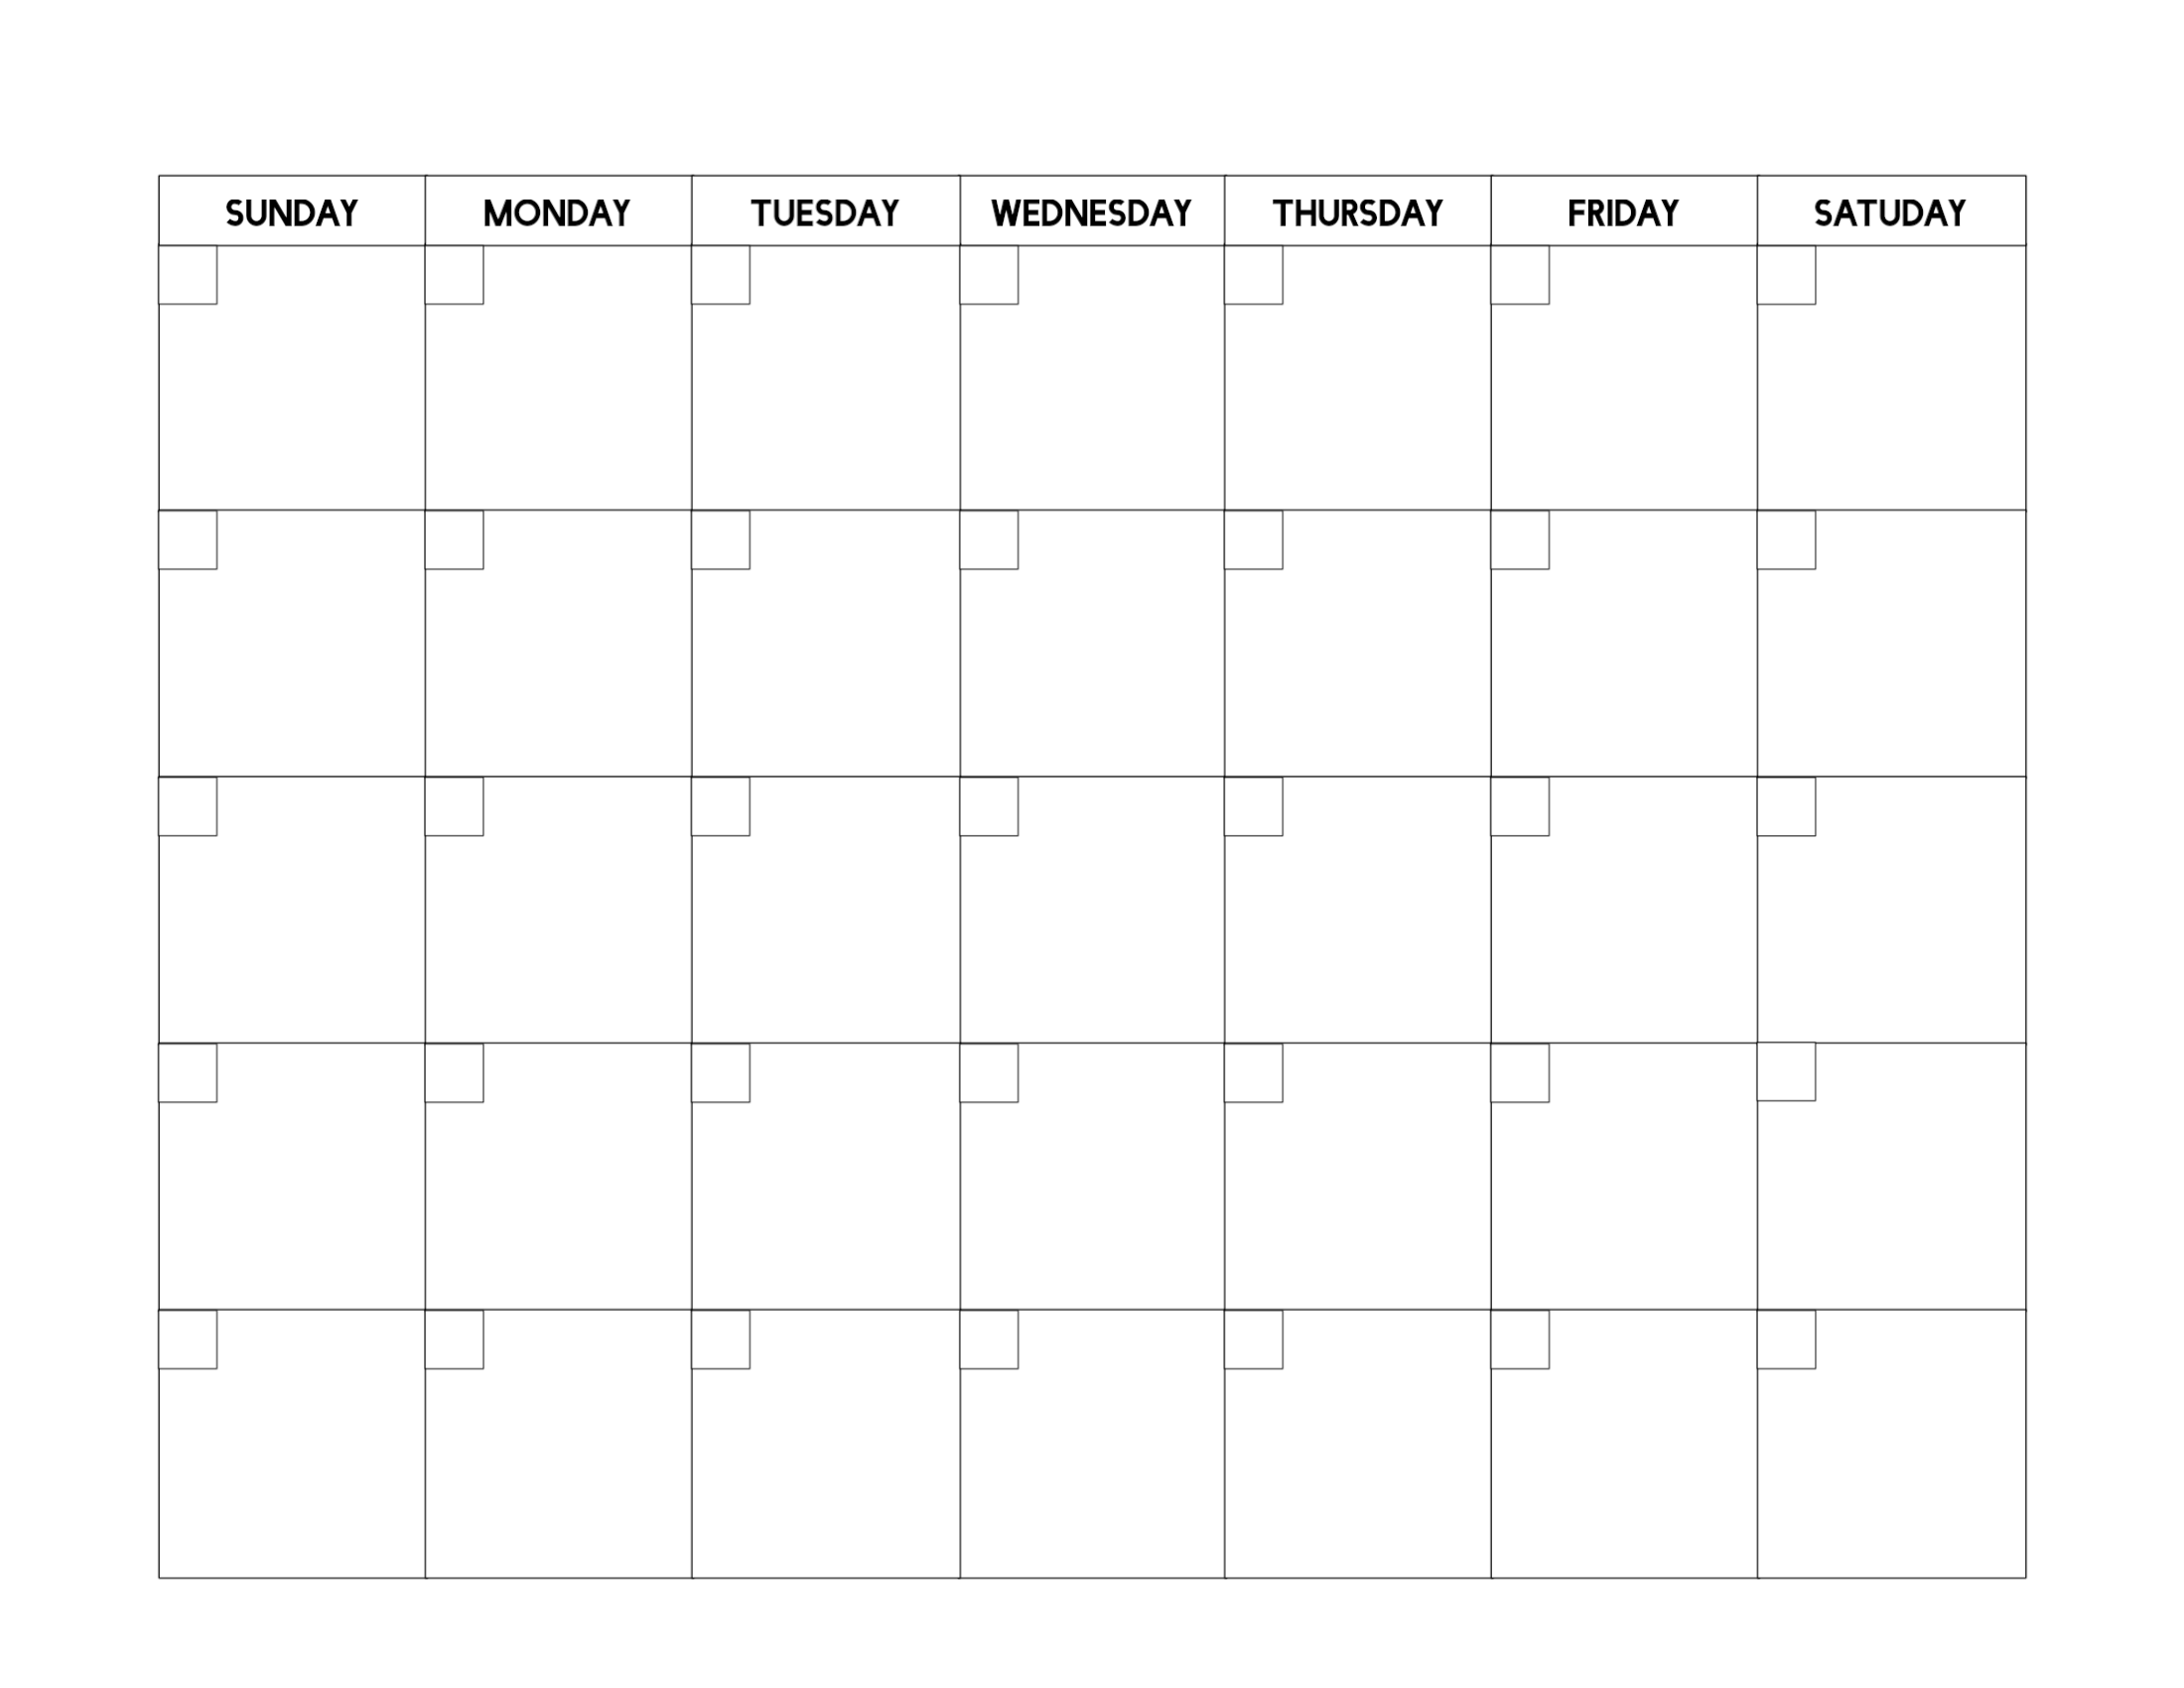 printable calendar example templates at allbusinesstemplatescom free